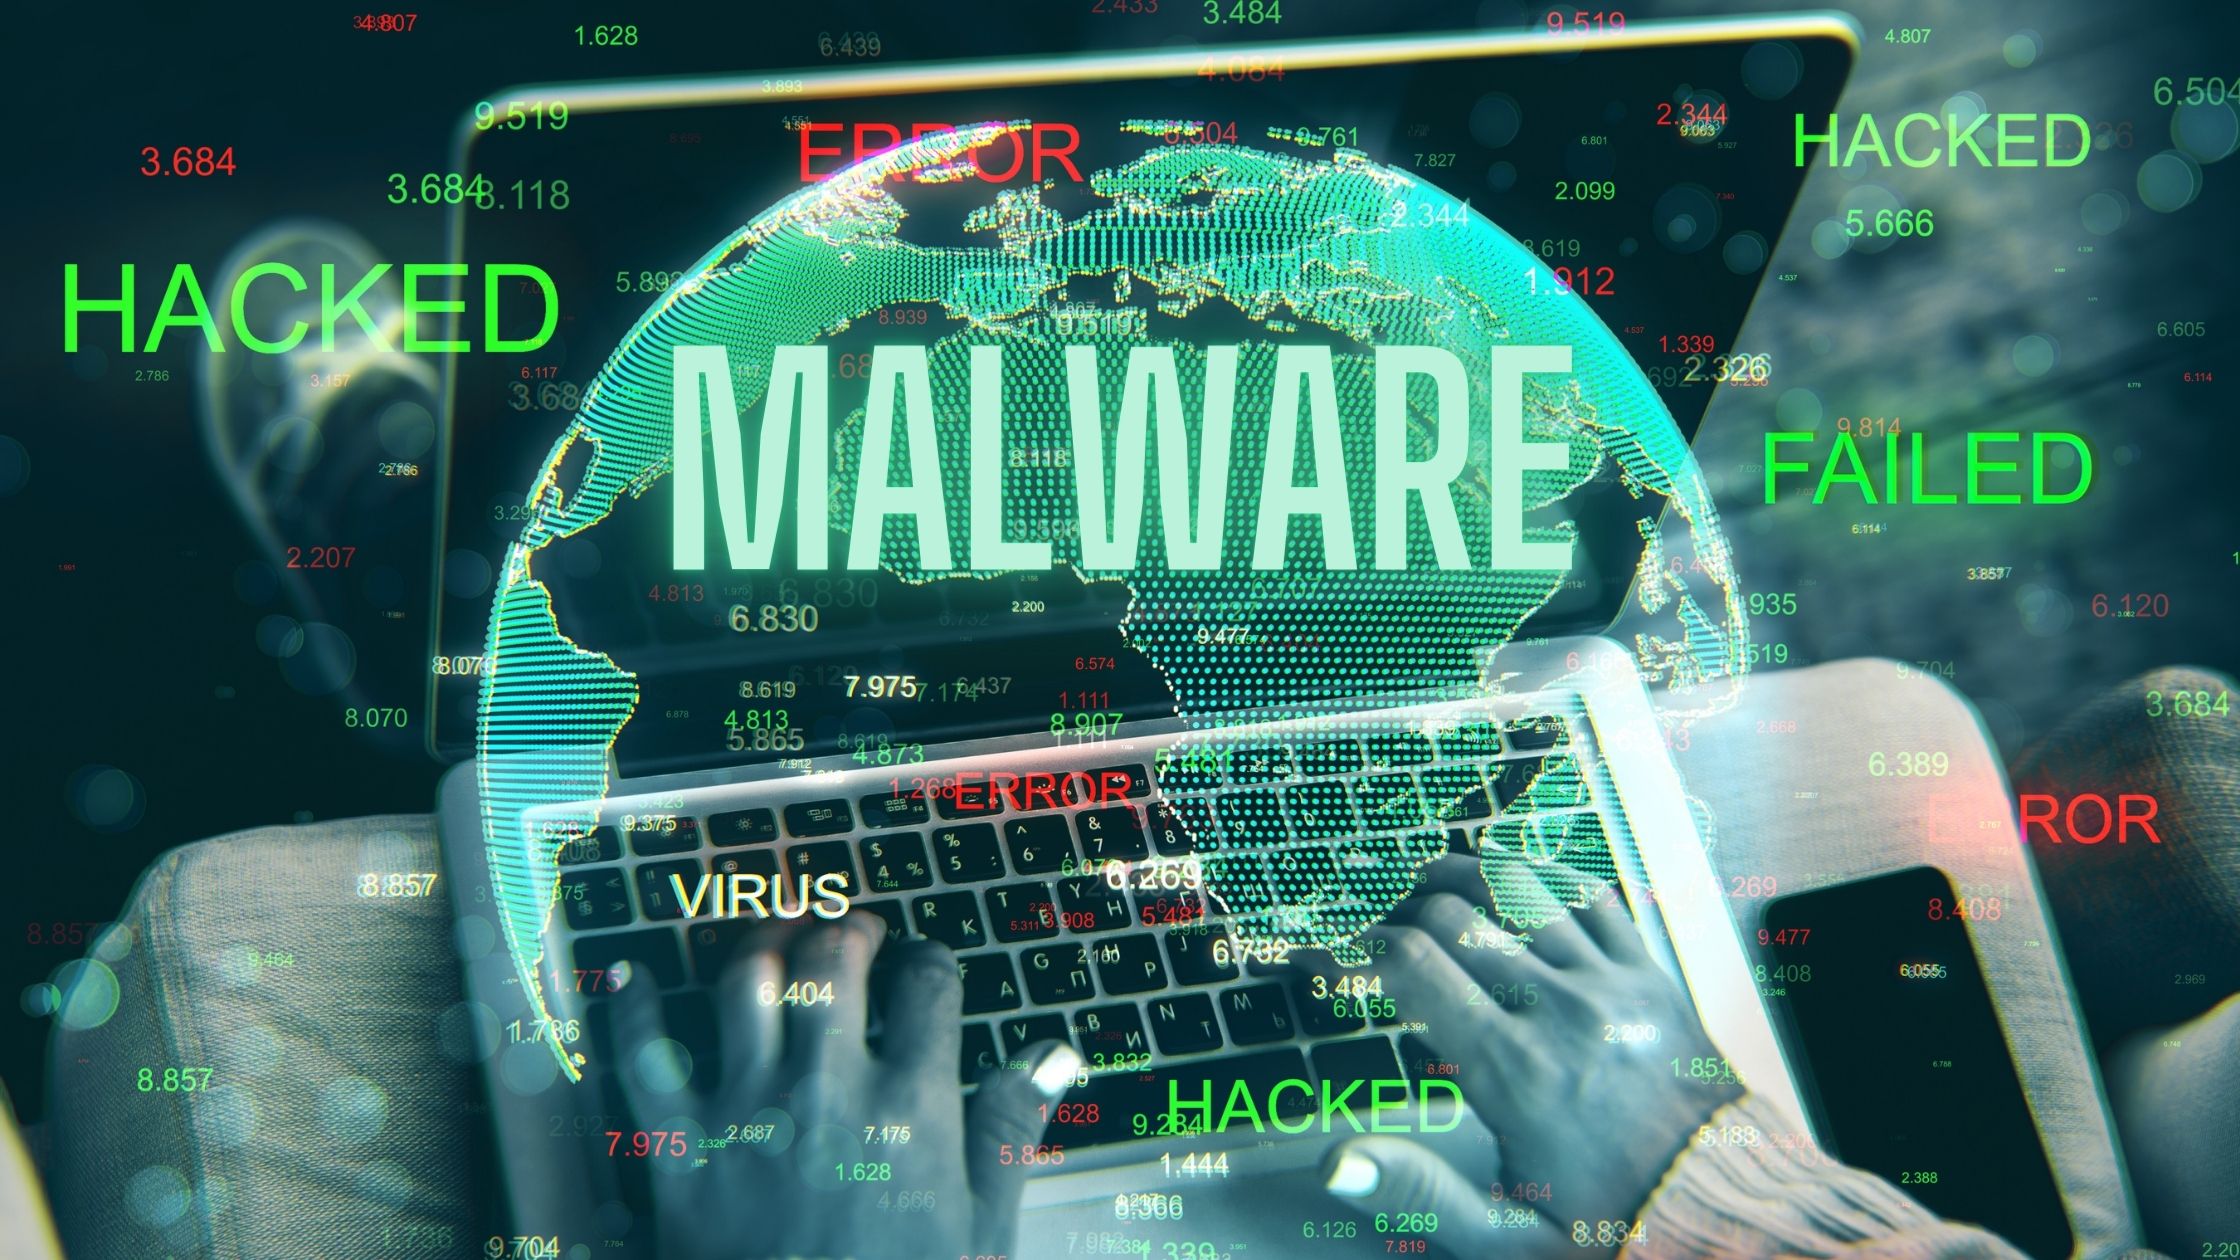 Types of Malware